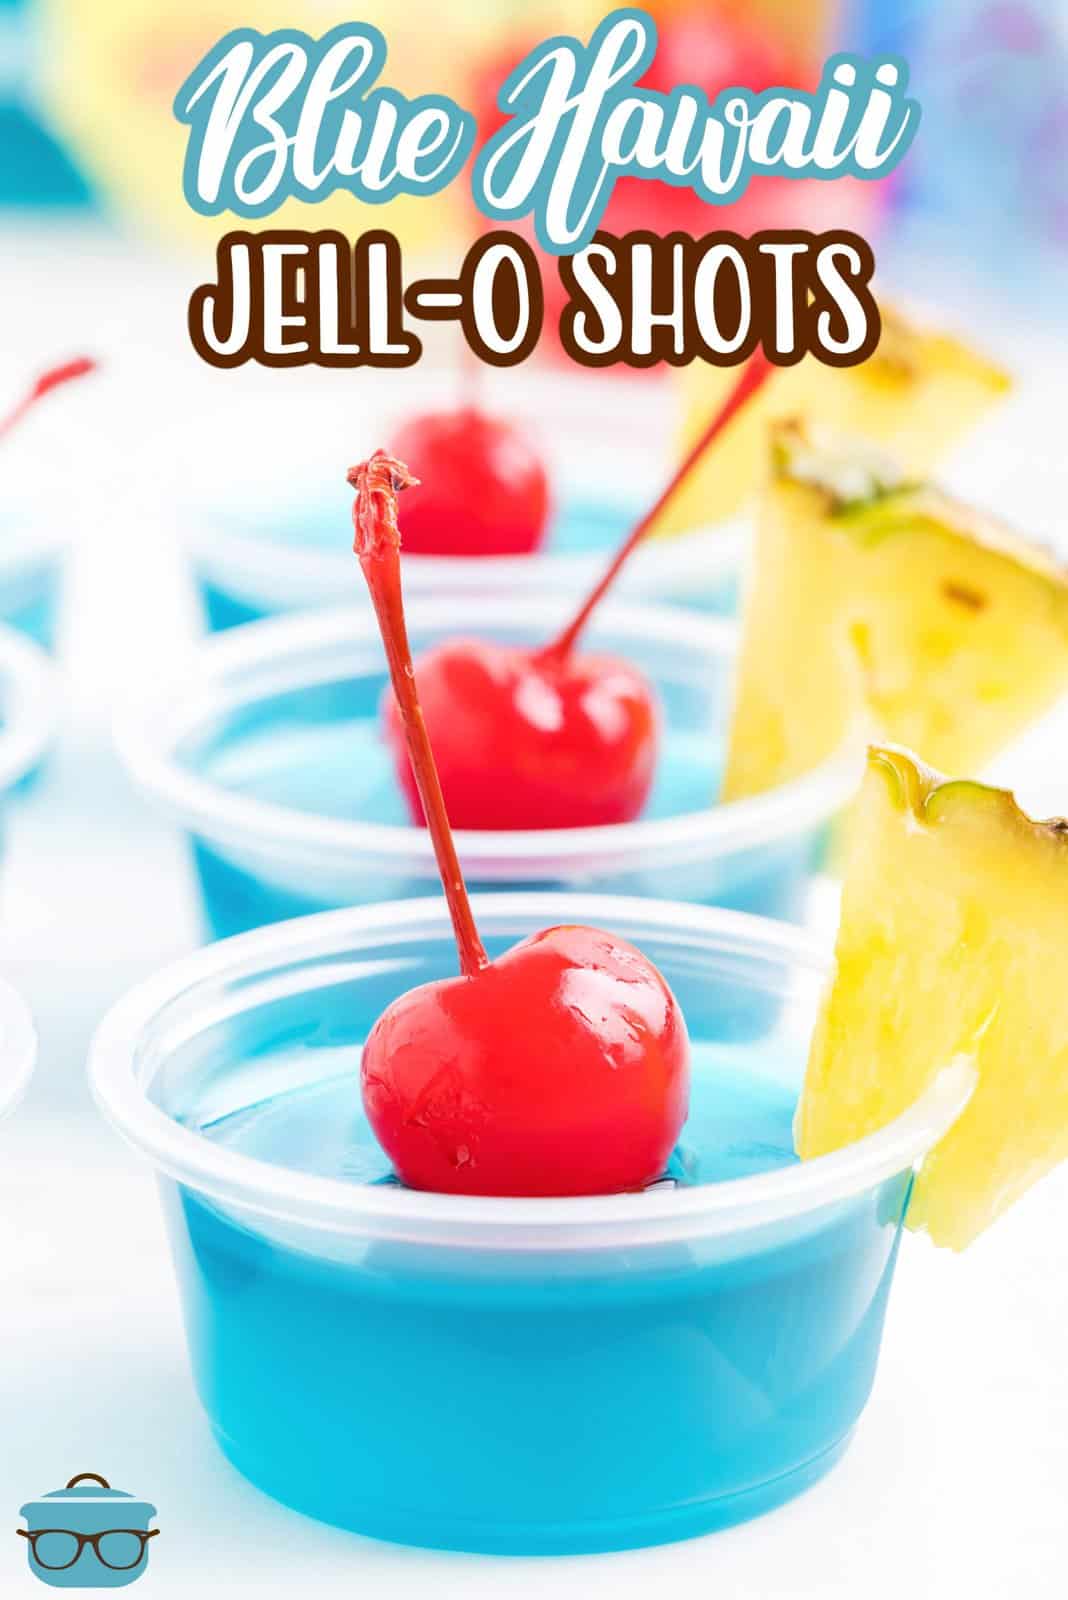 A couple pineapple and cherry garnished Blue Hawaii Jell-O Shots.